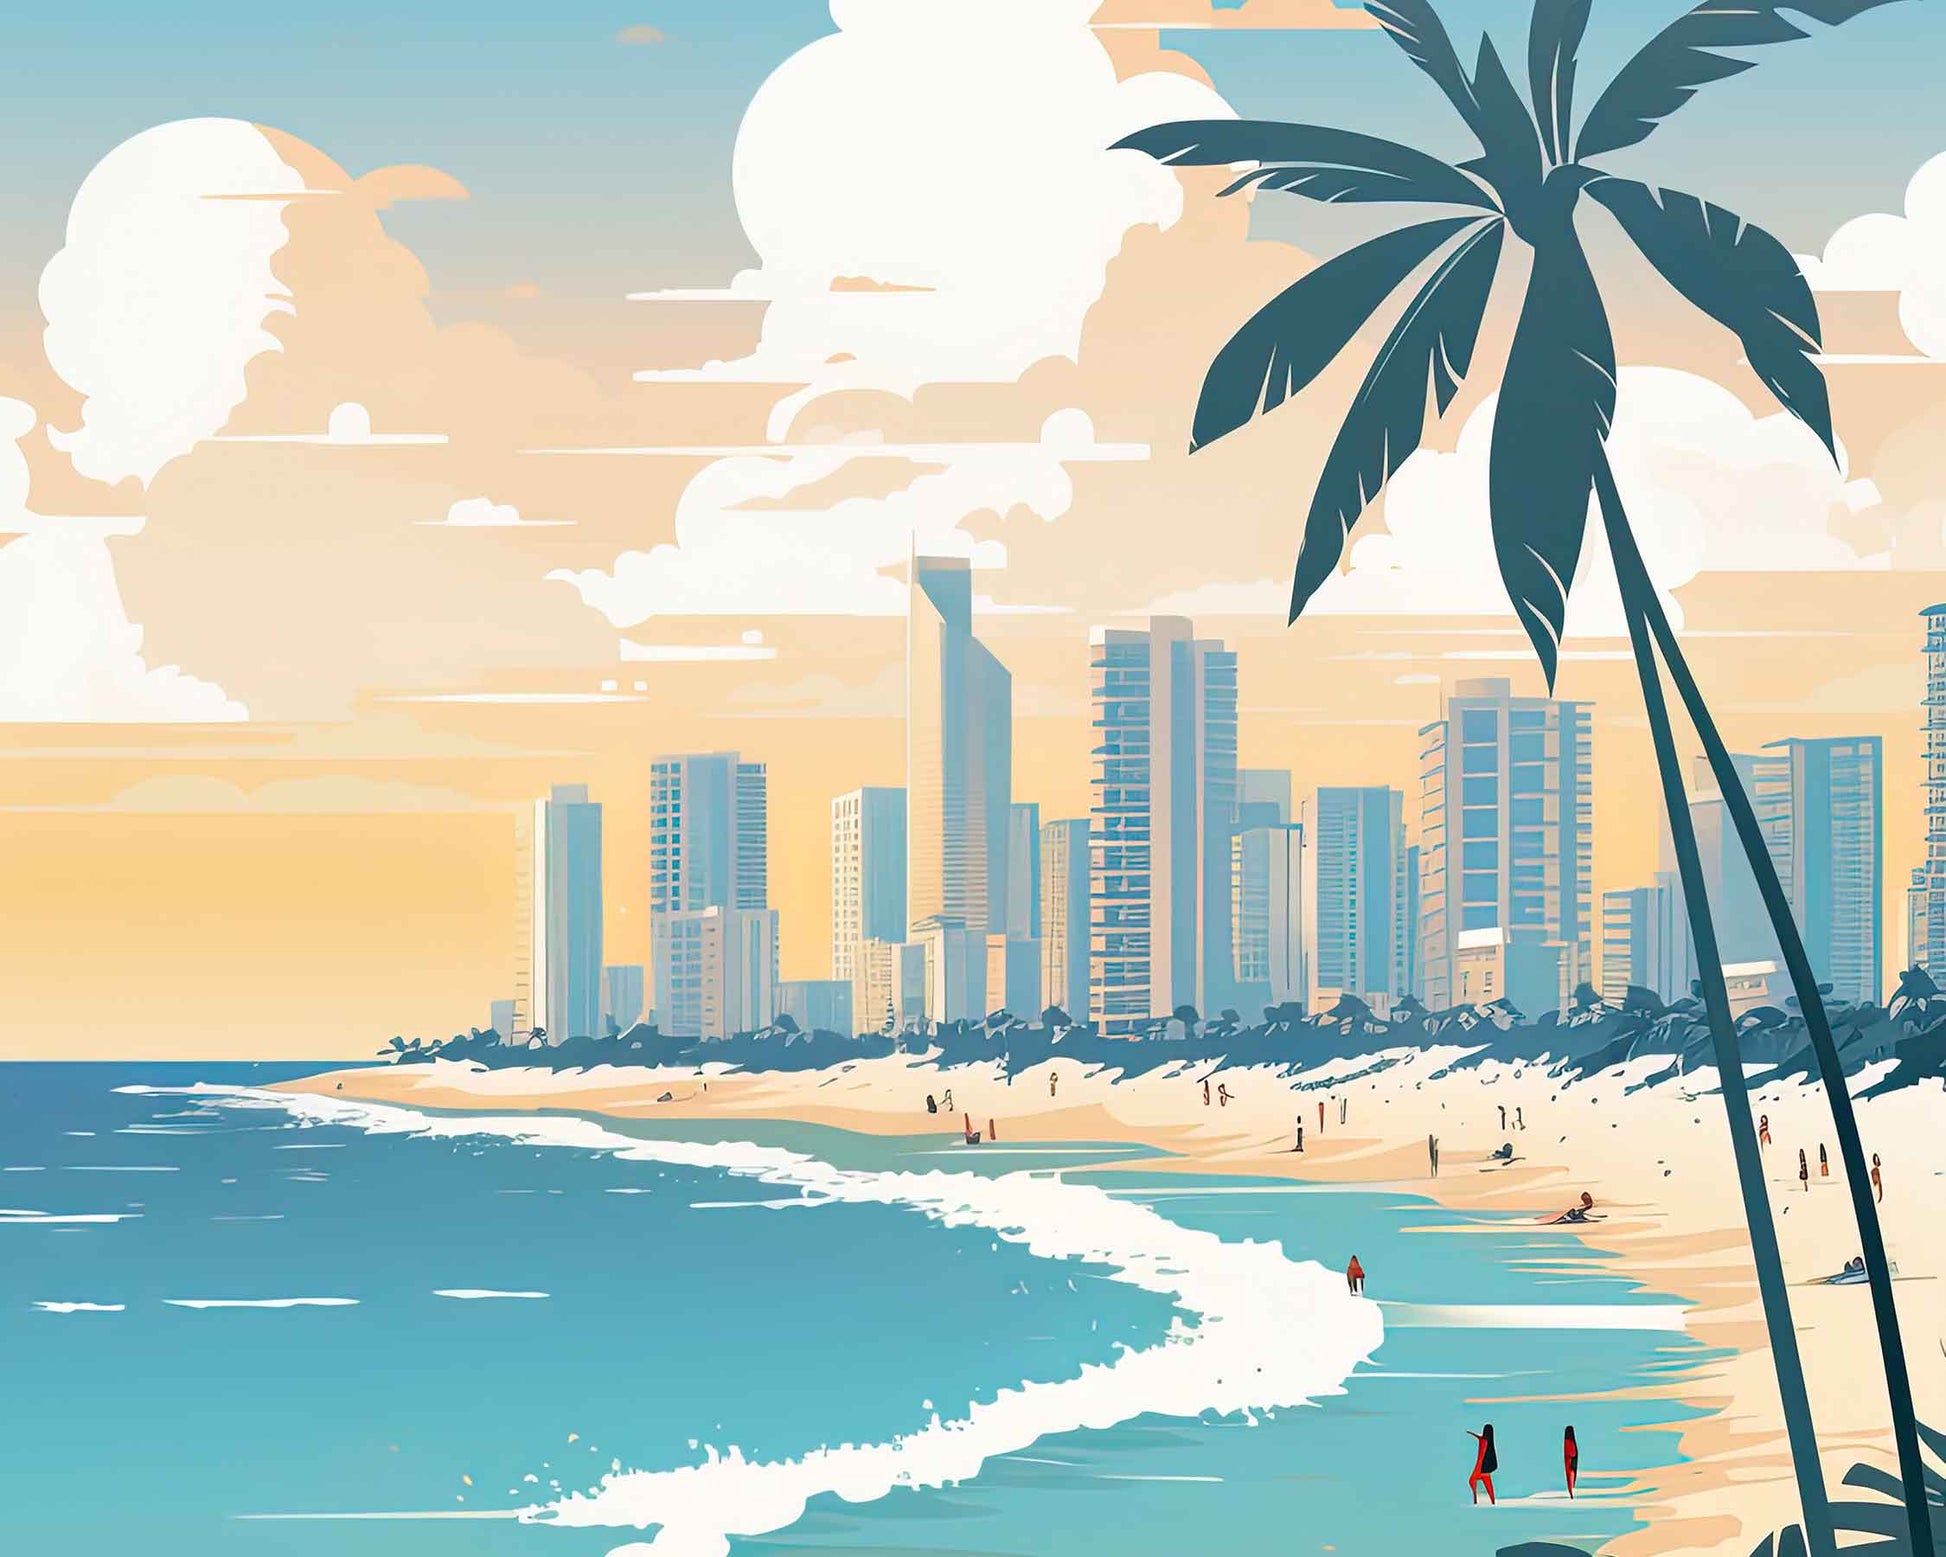 Framed Image of Gold Coast Australia Wall Art Travel Poster Prints Illustration